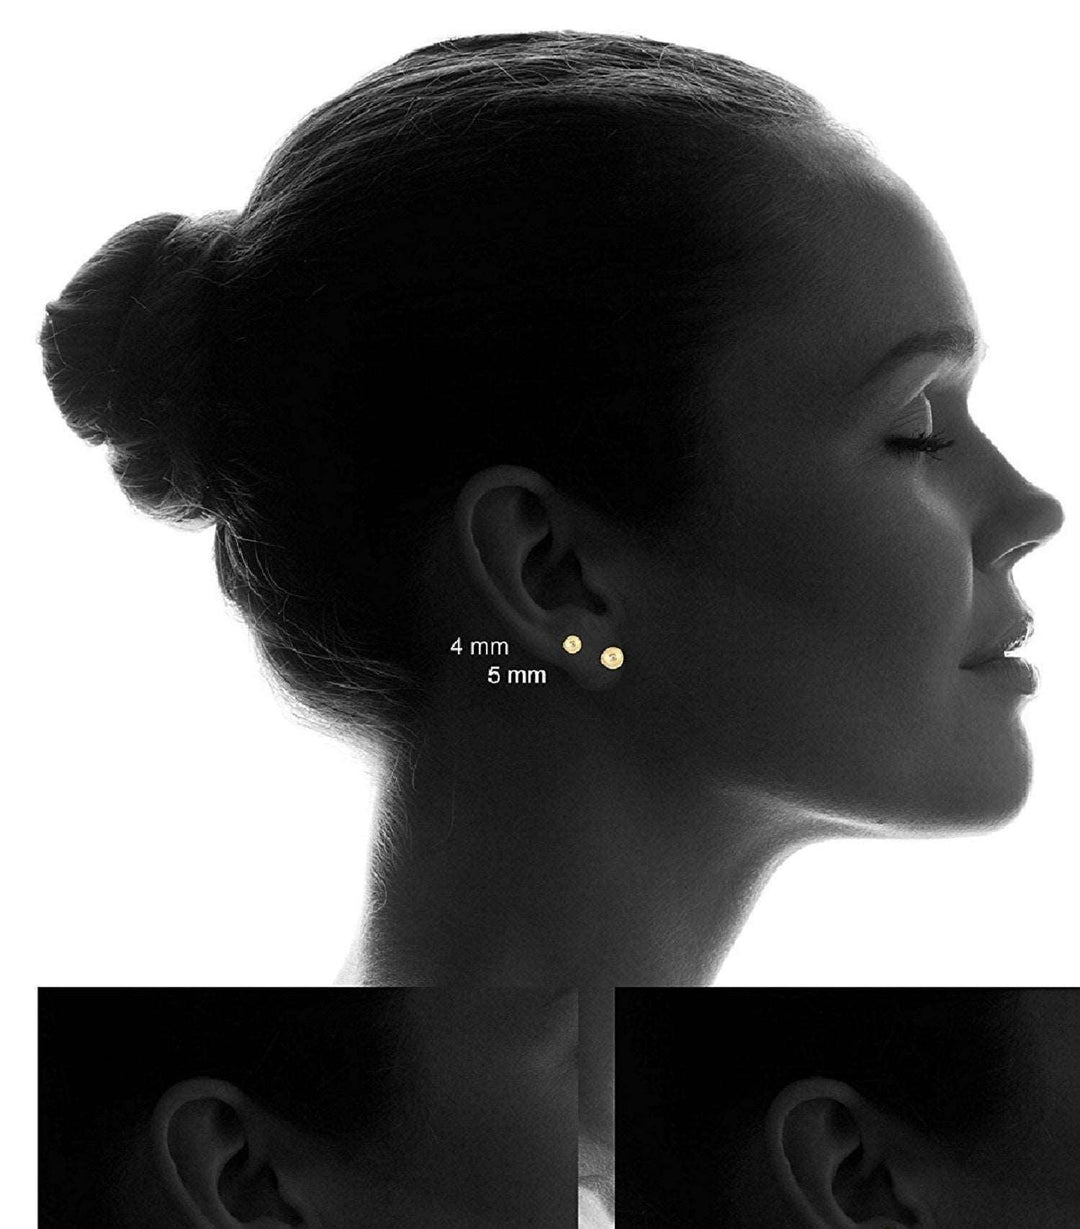 14k White Gold Hollow Ball Stud Earrings Sizes 3MM - 8MM - Brand My Case